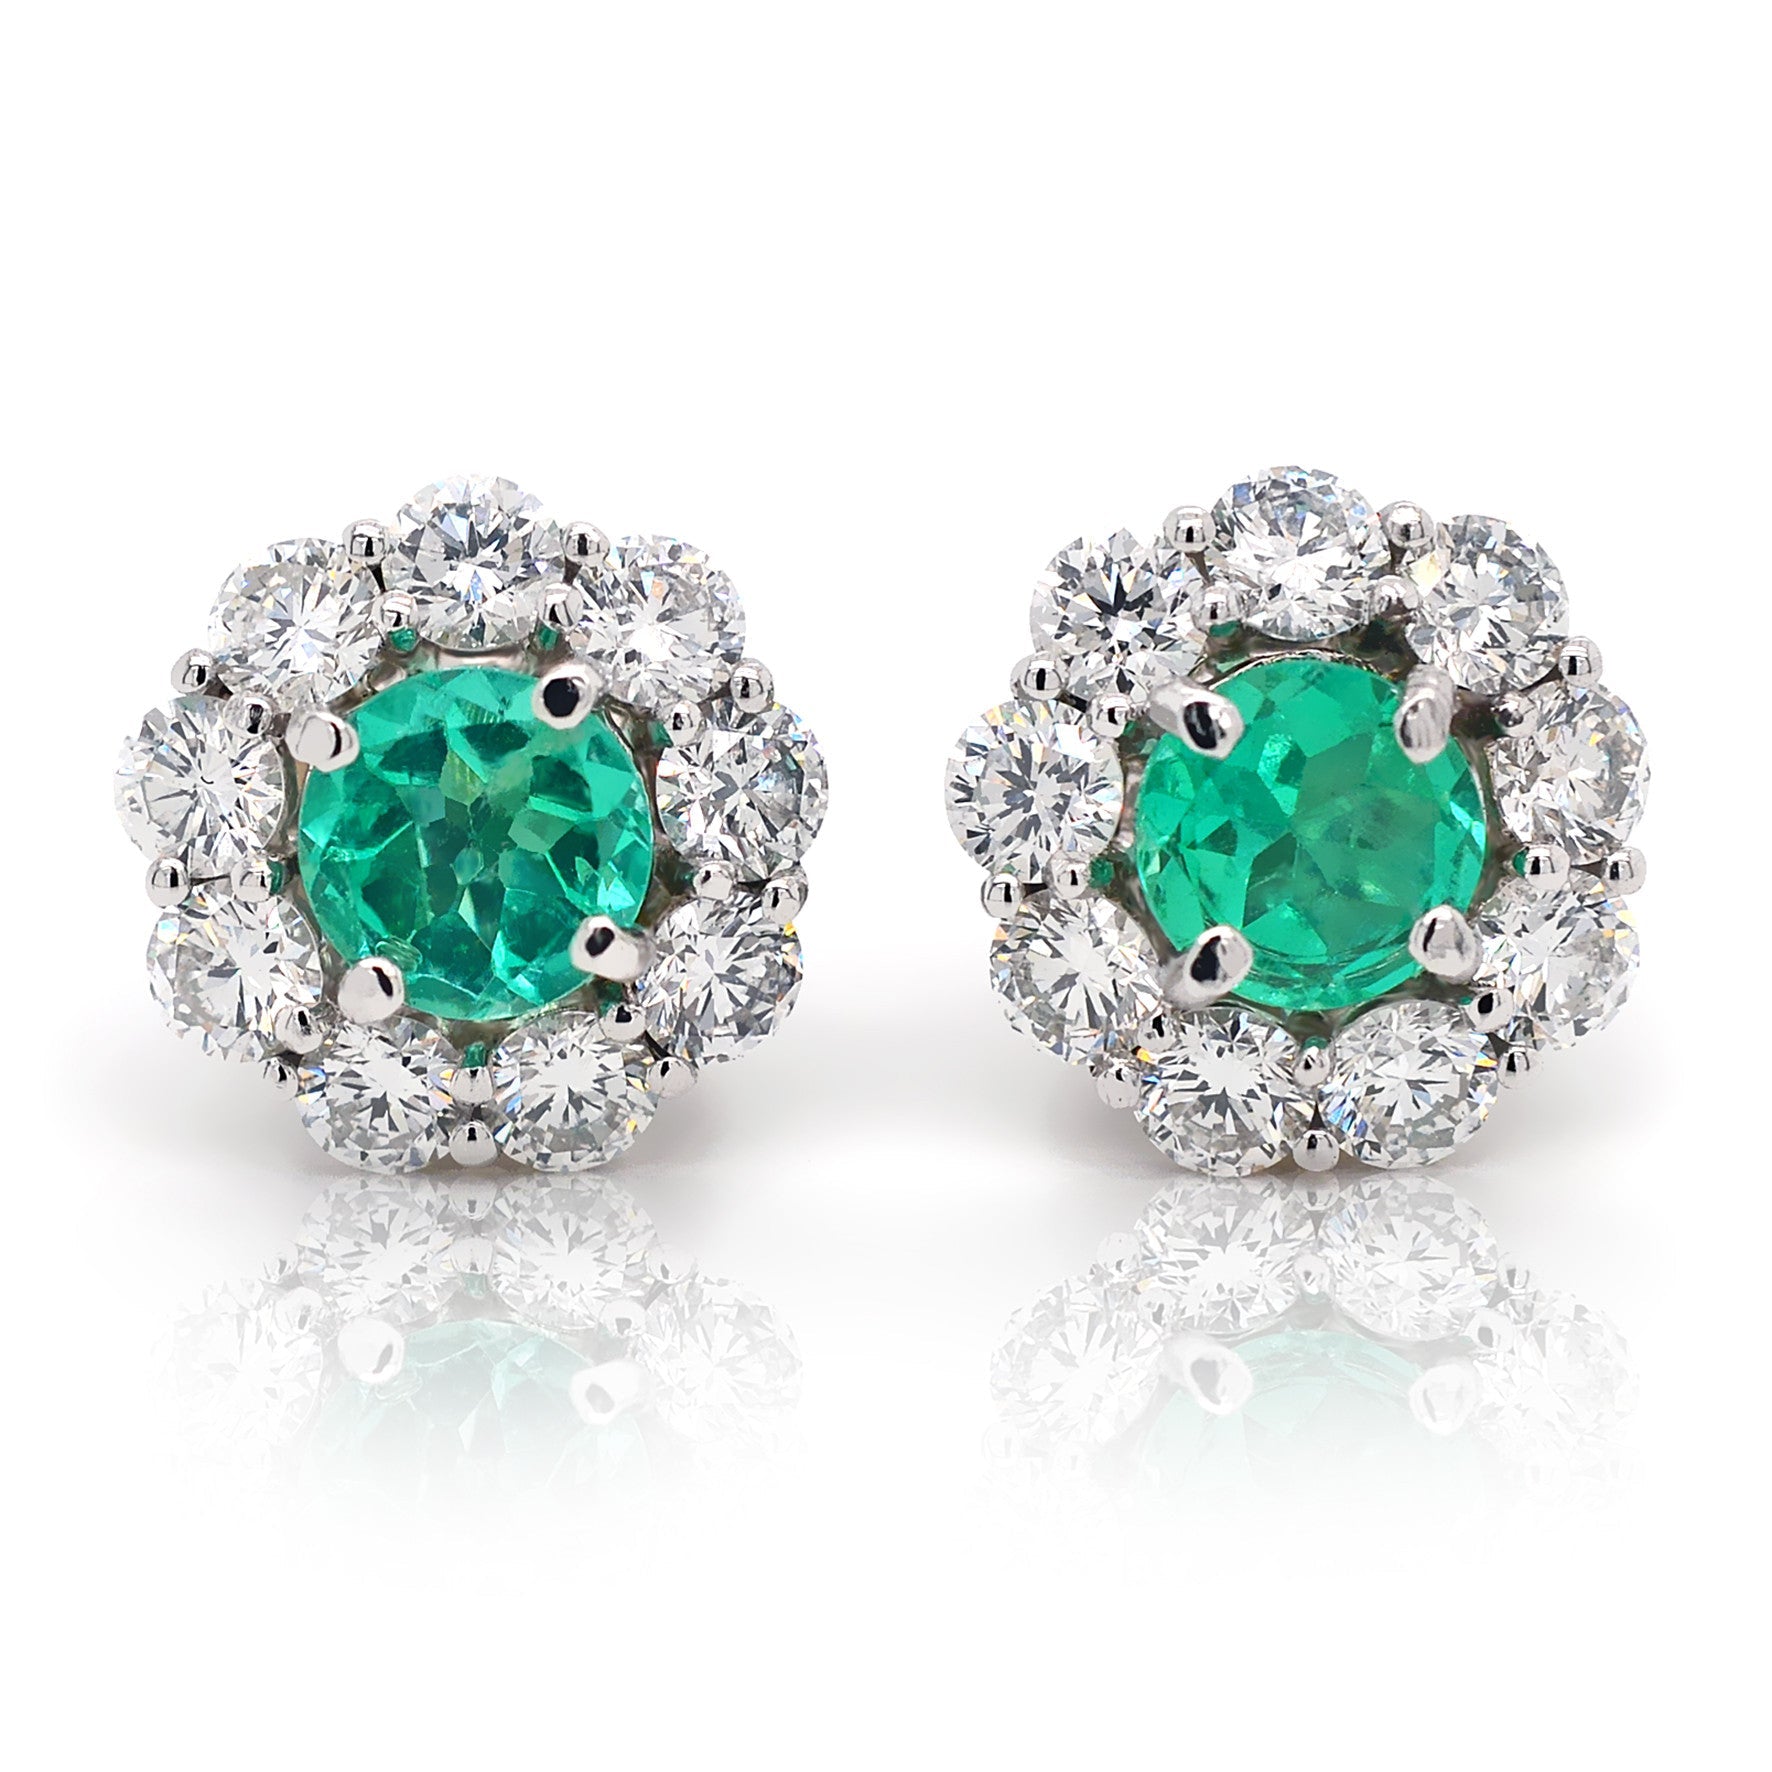 Columbian Emerald Earrings with a halo of Diamonds - ForeverJewels Design Studio 8